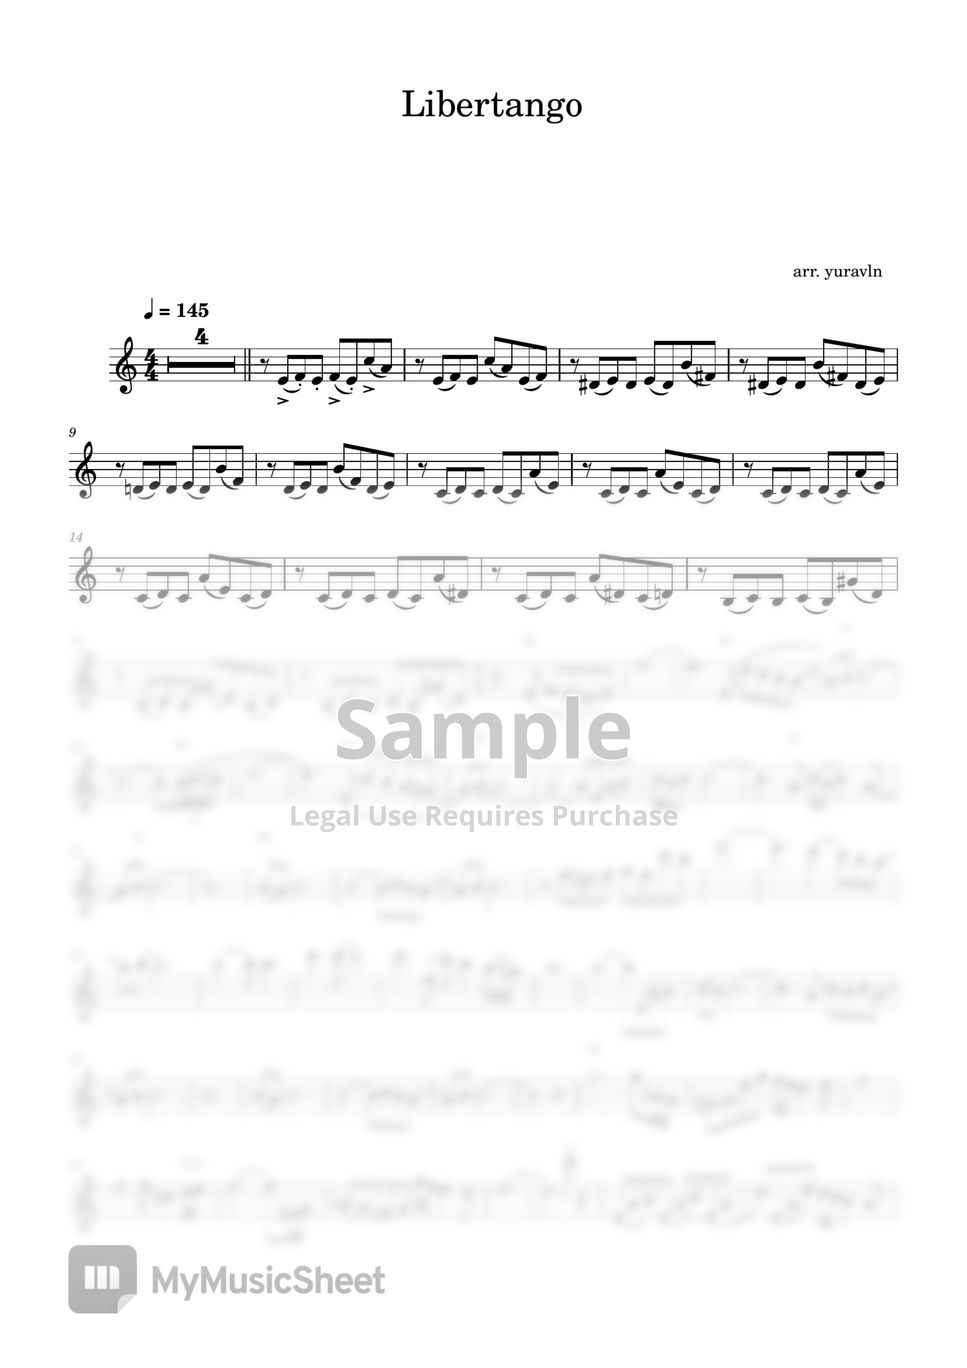 A. Piazzolla - Libertango by yuravln